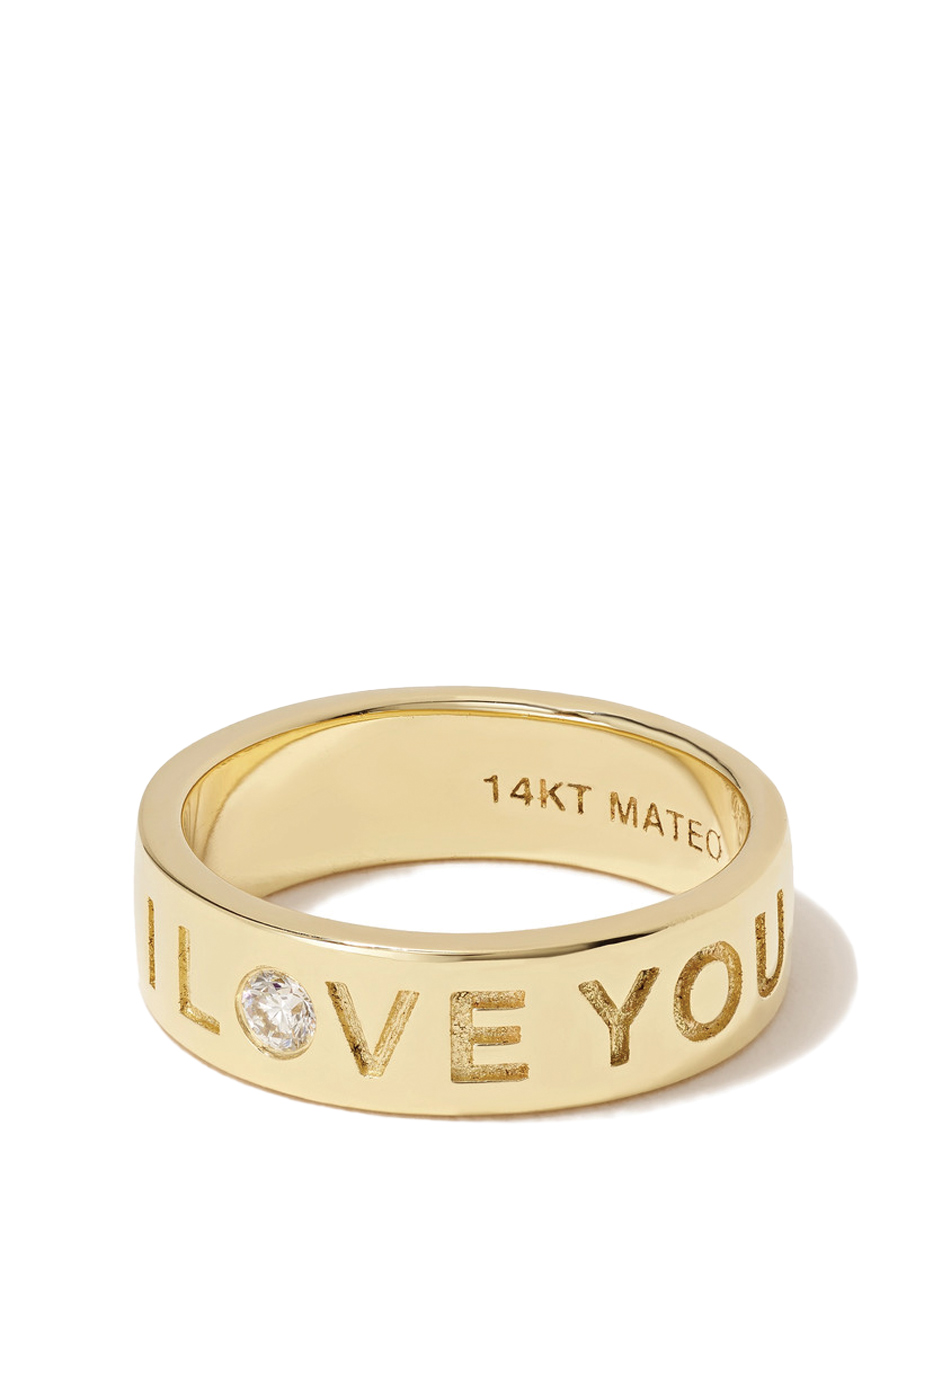 66 Mateo, I Love You 14 Karat Gold Diamond Ring, Net A Porter.com